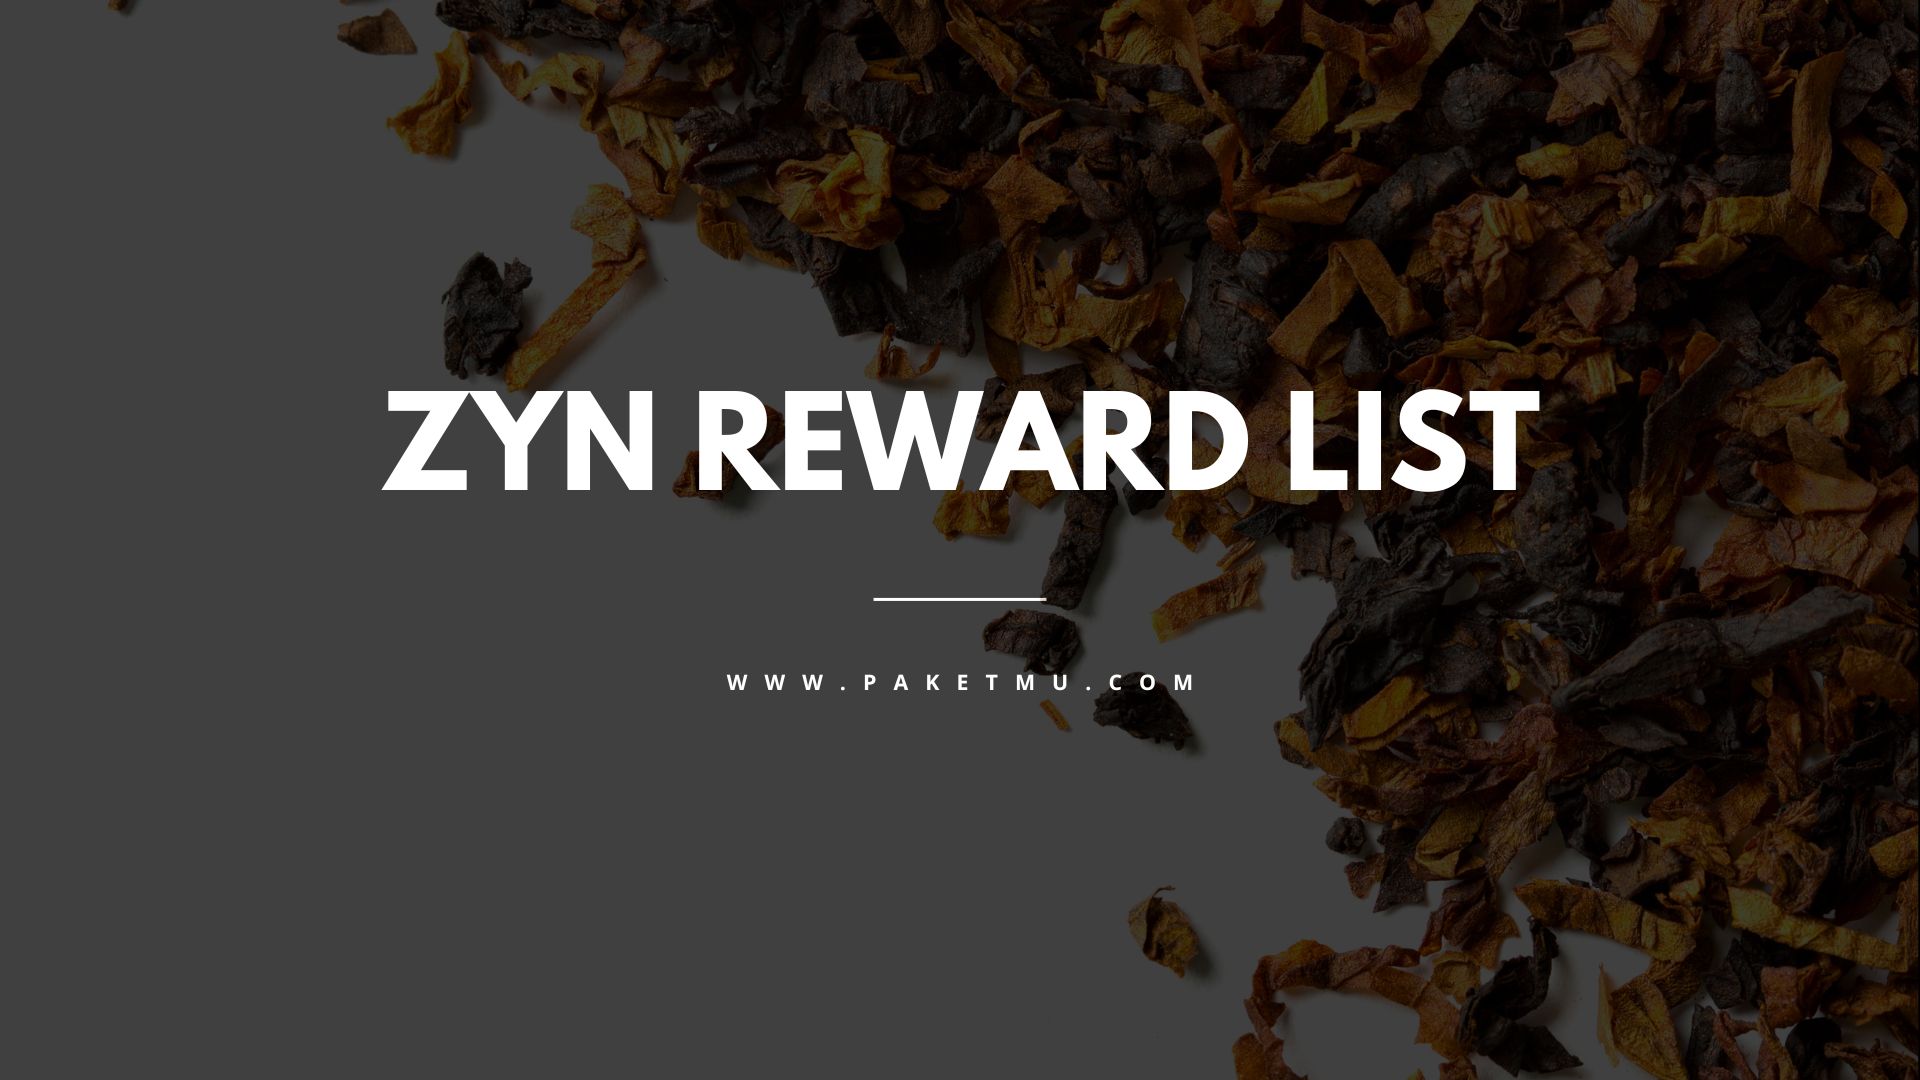 Ni ZYN REWARDS POINTS 5,430 STORES ACCOUNT Gapt CART NICOTINE